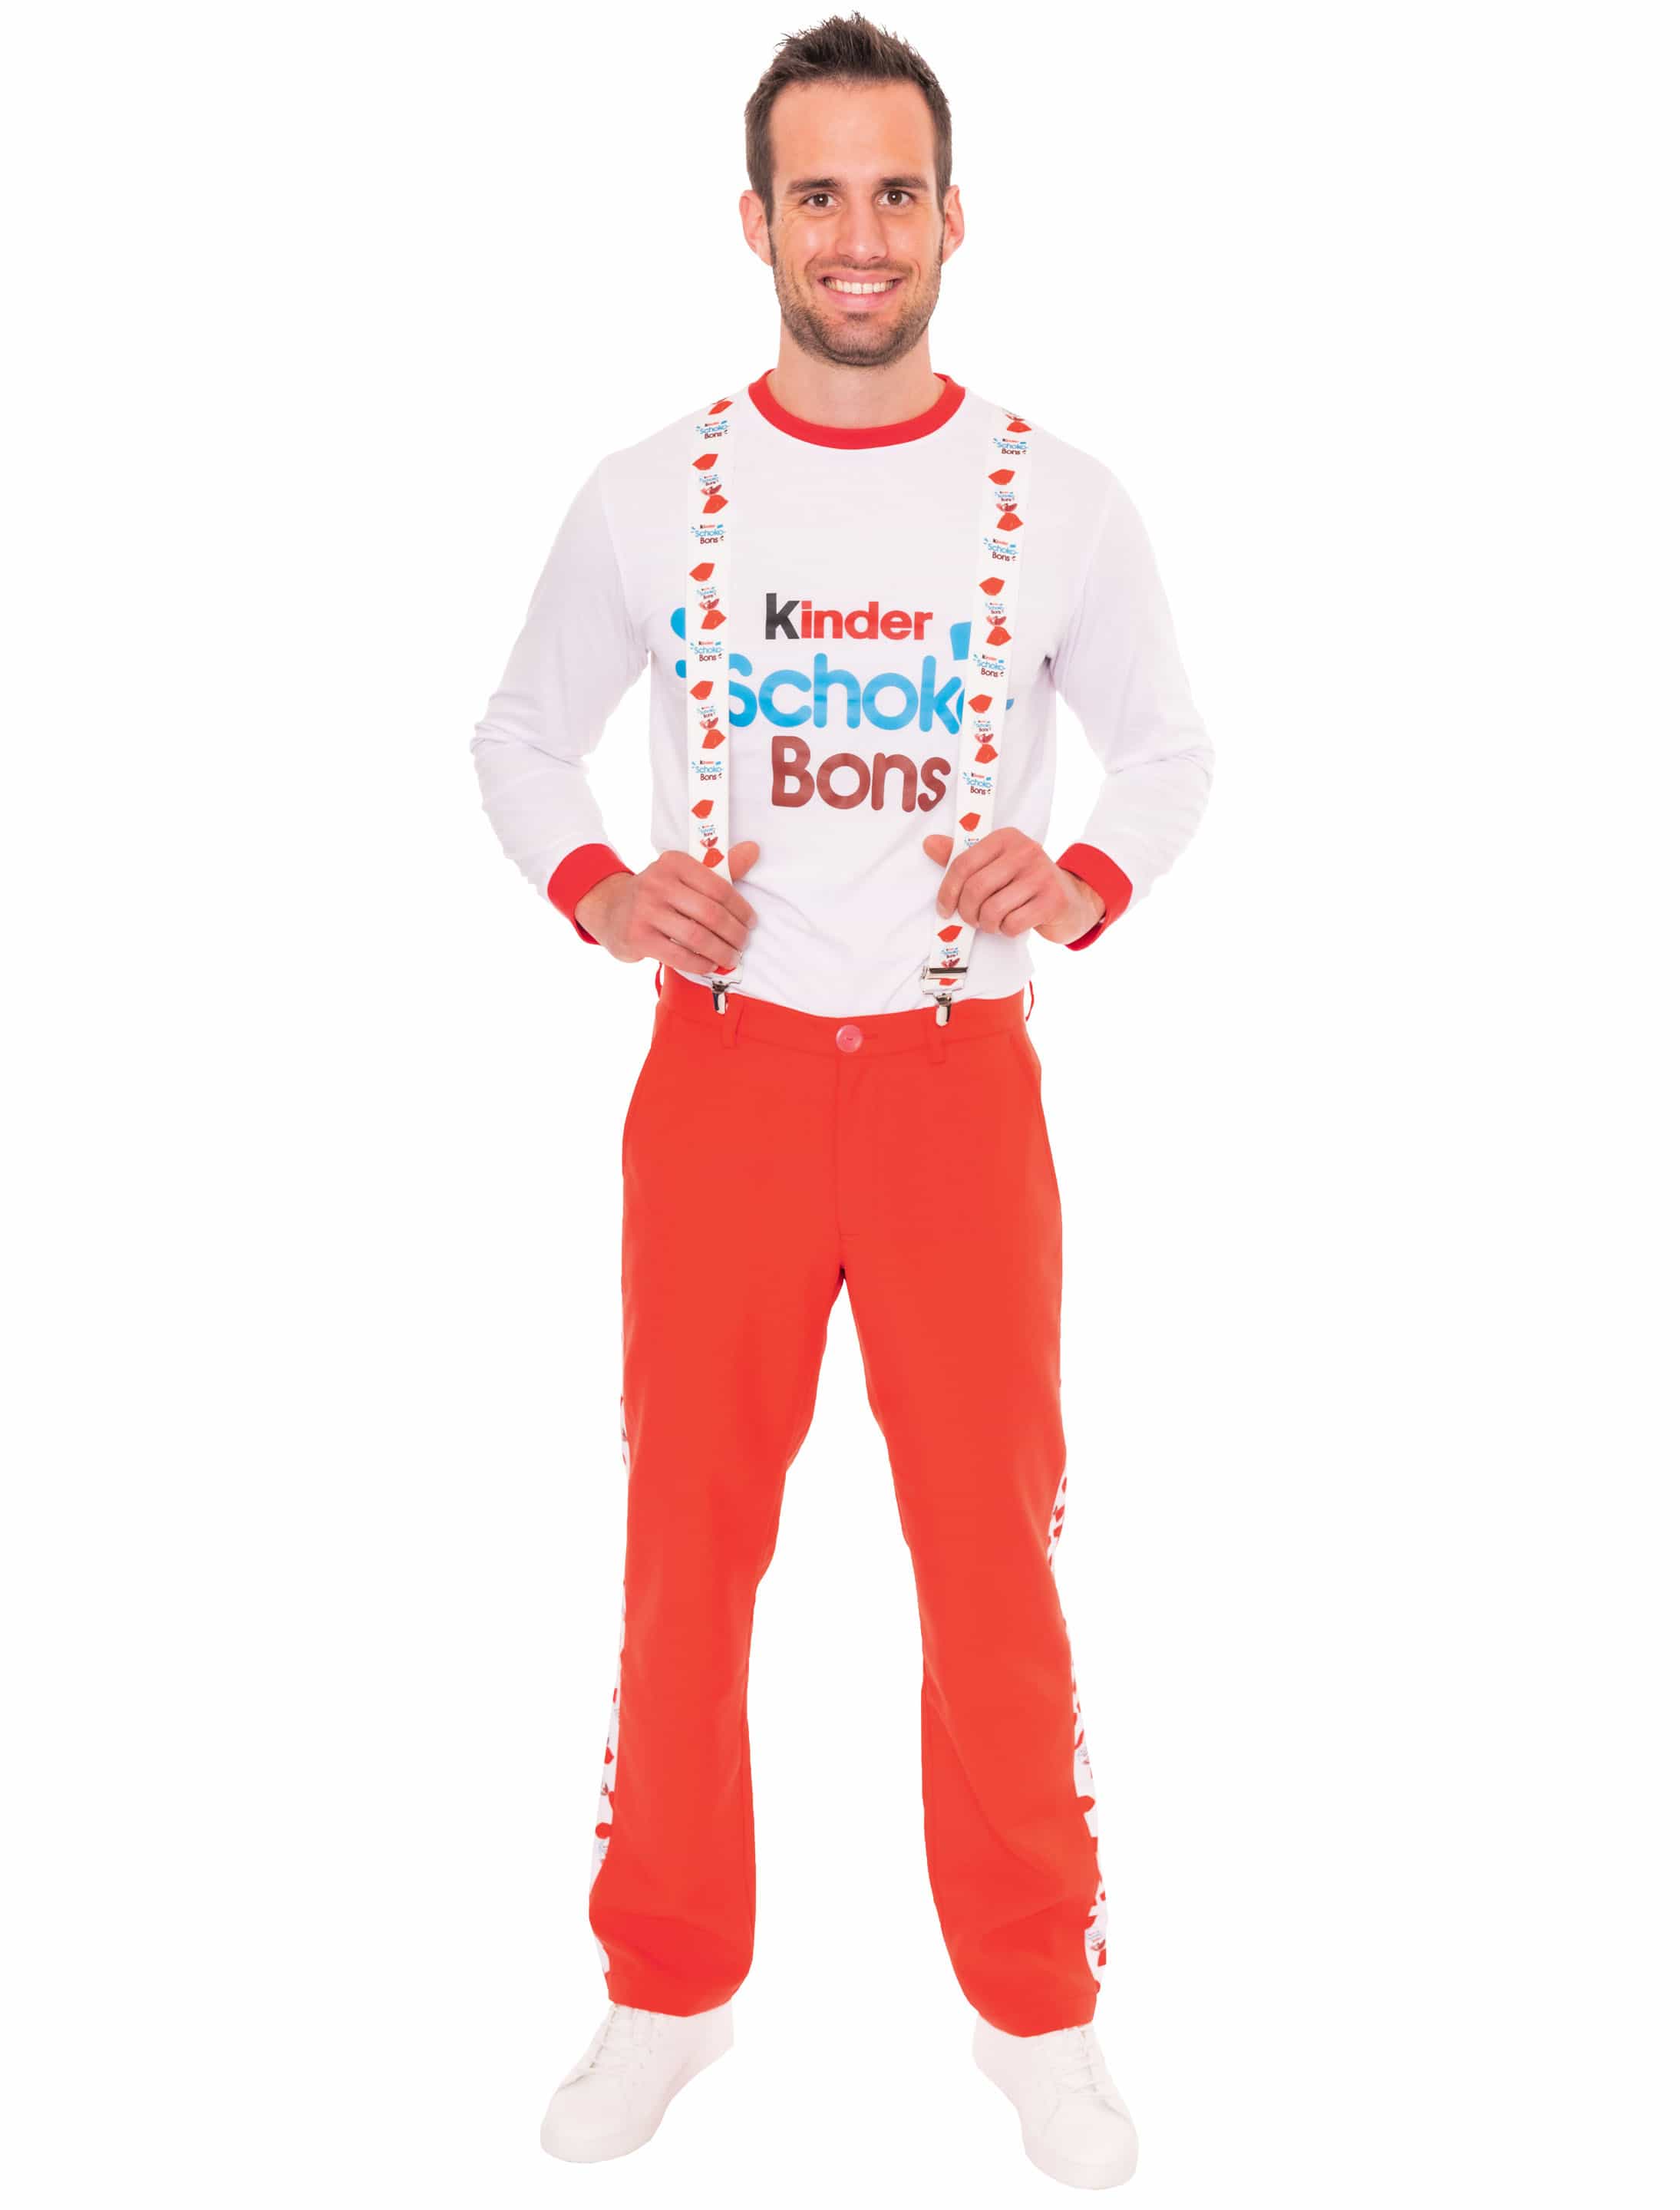 Shirt langarm kinder Schoko-Bons Herren rot/weiß XL